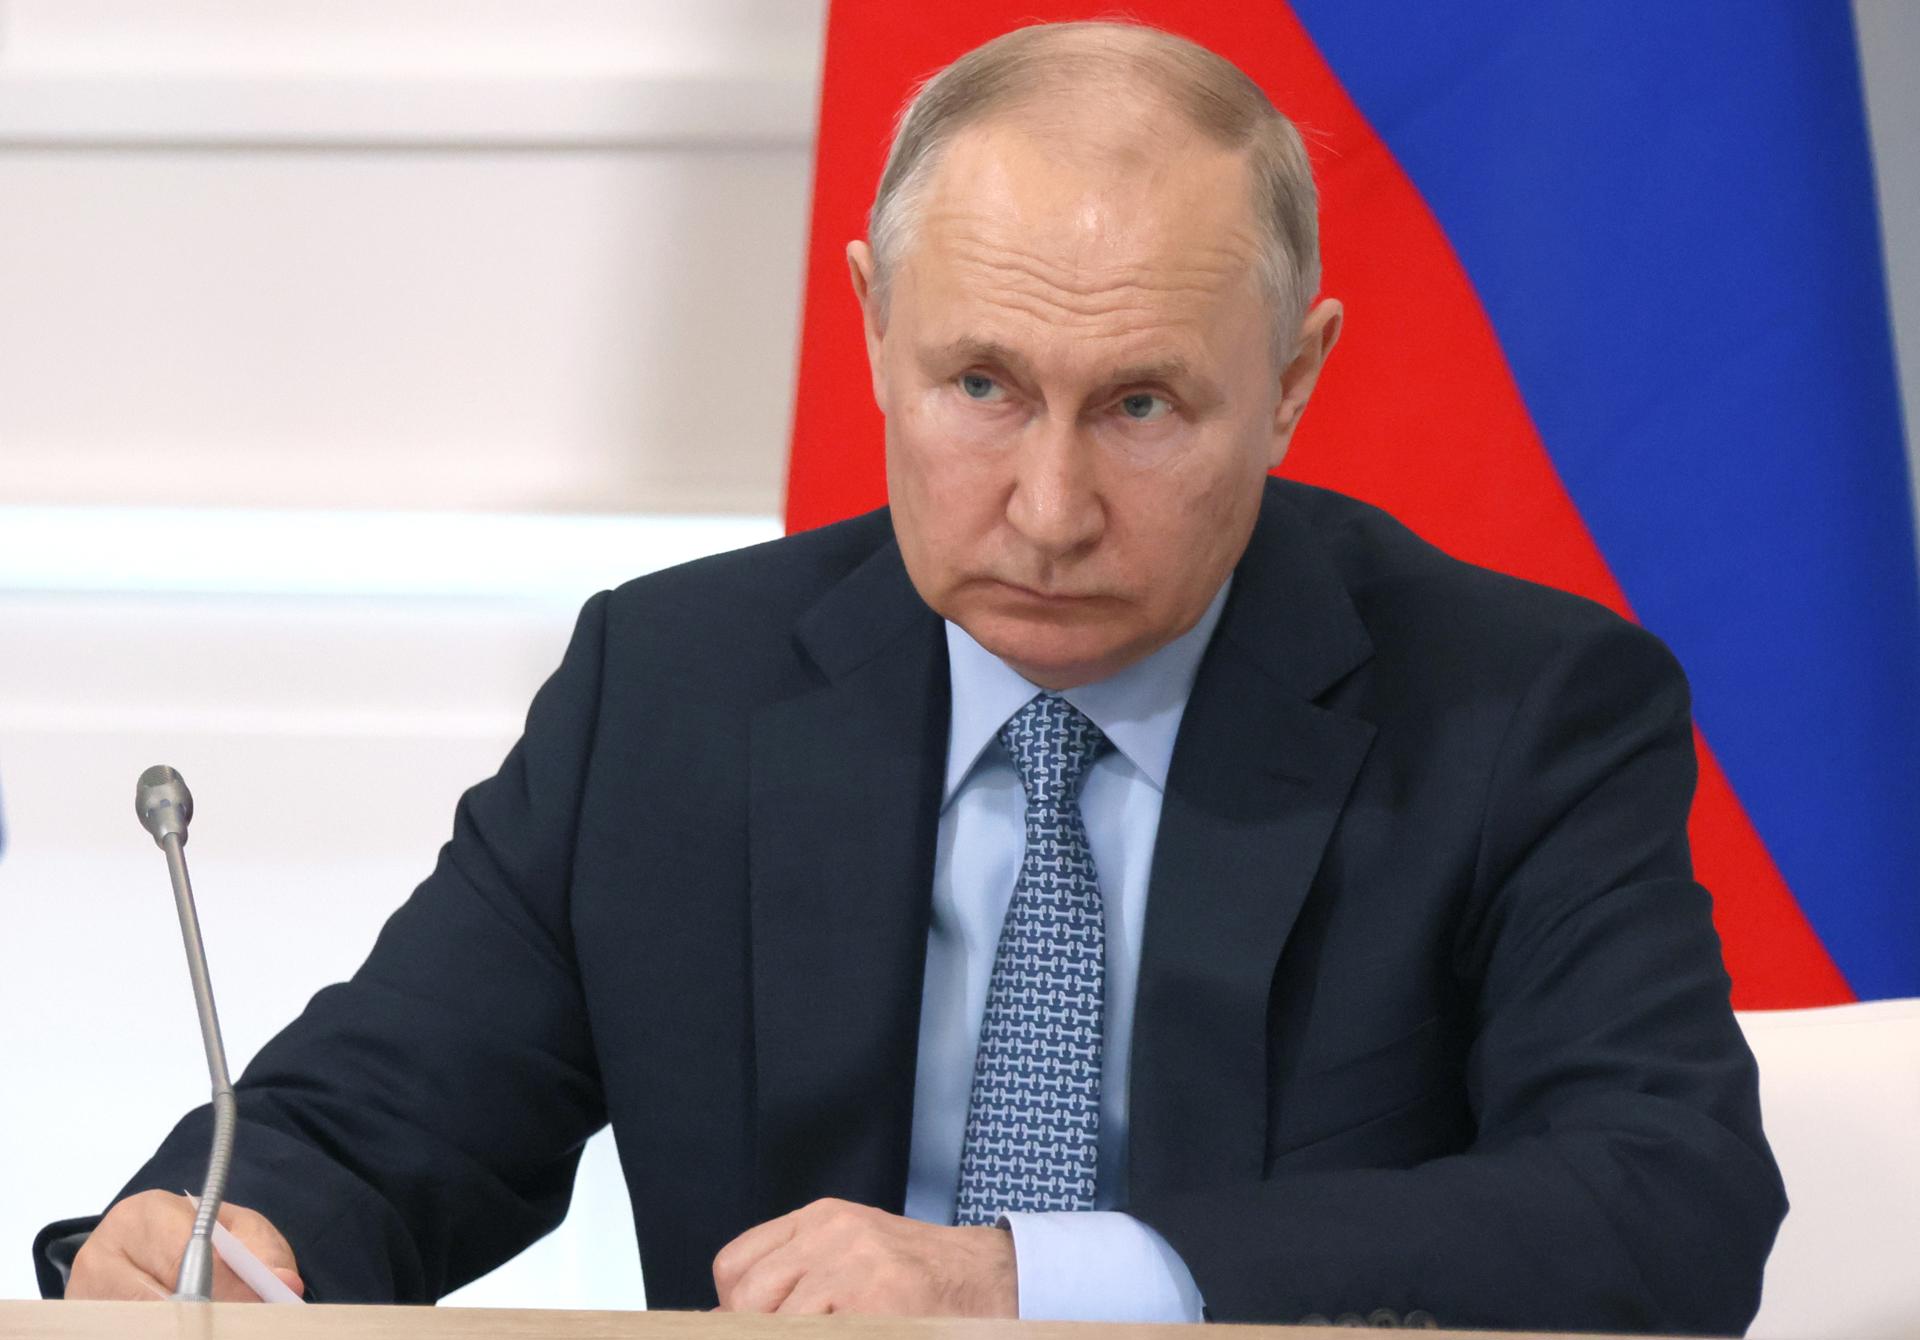 El presidente ruso, Vladímir Putin. EFE/EPA/MIKHAIL METZEL / SPUTNIK / KREMLIN / POOL MANDATORY CREDIT